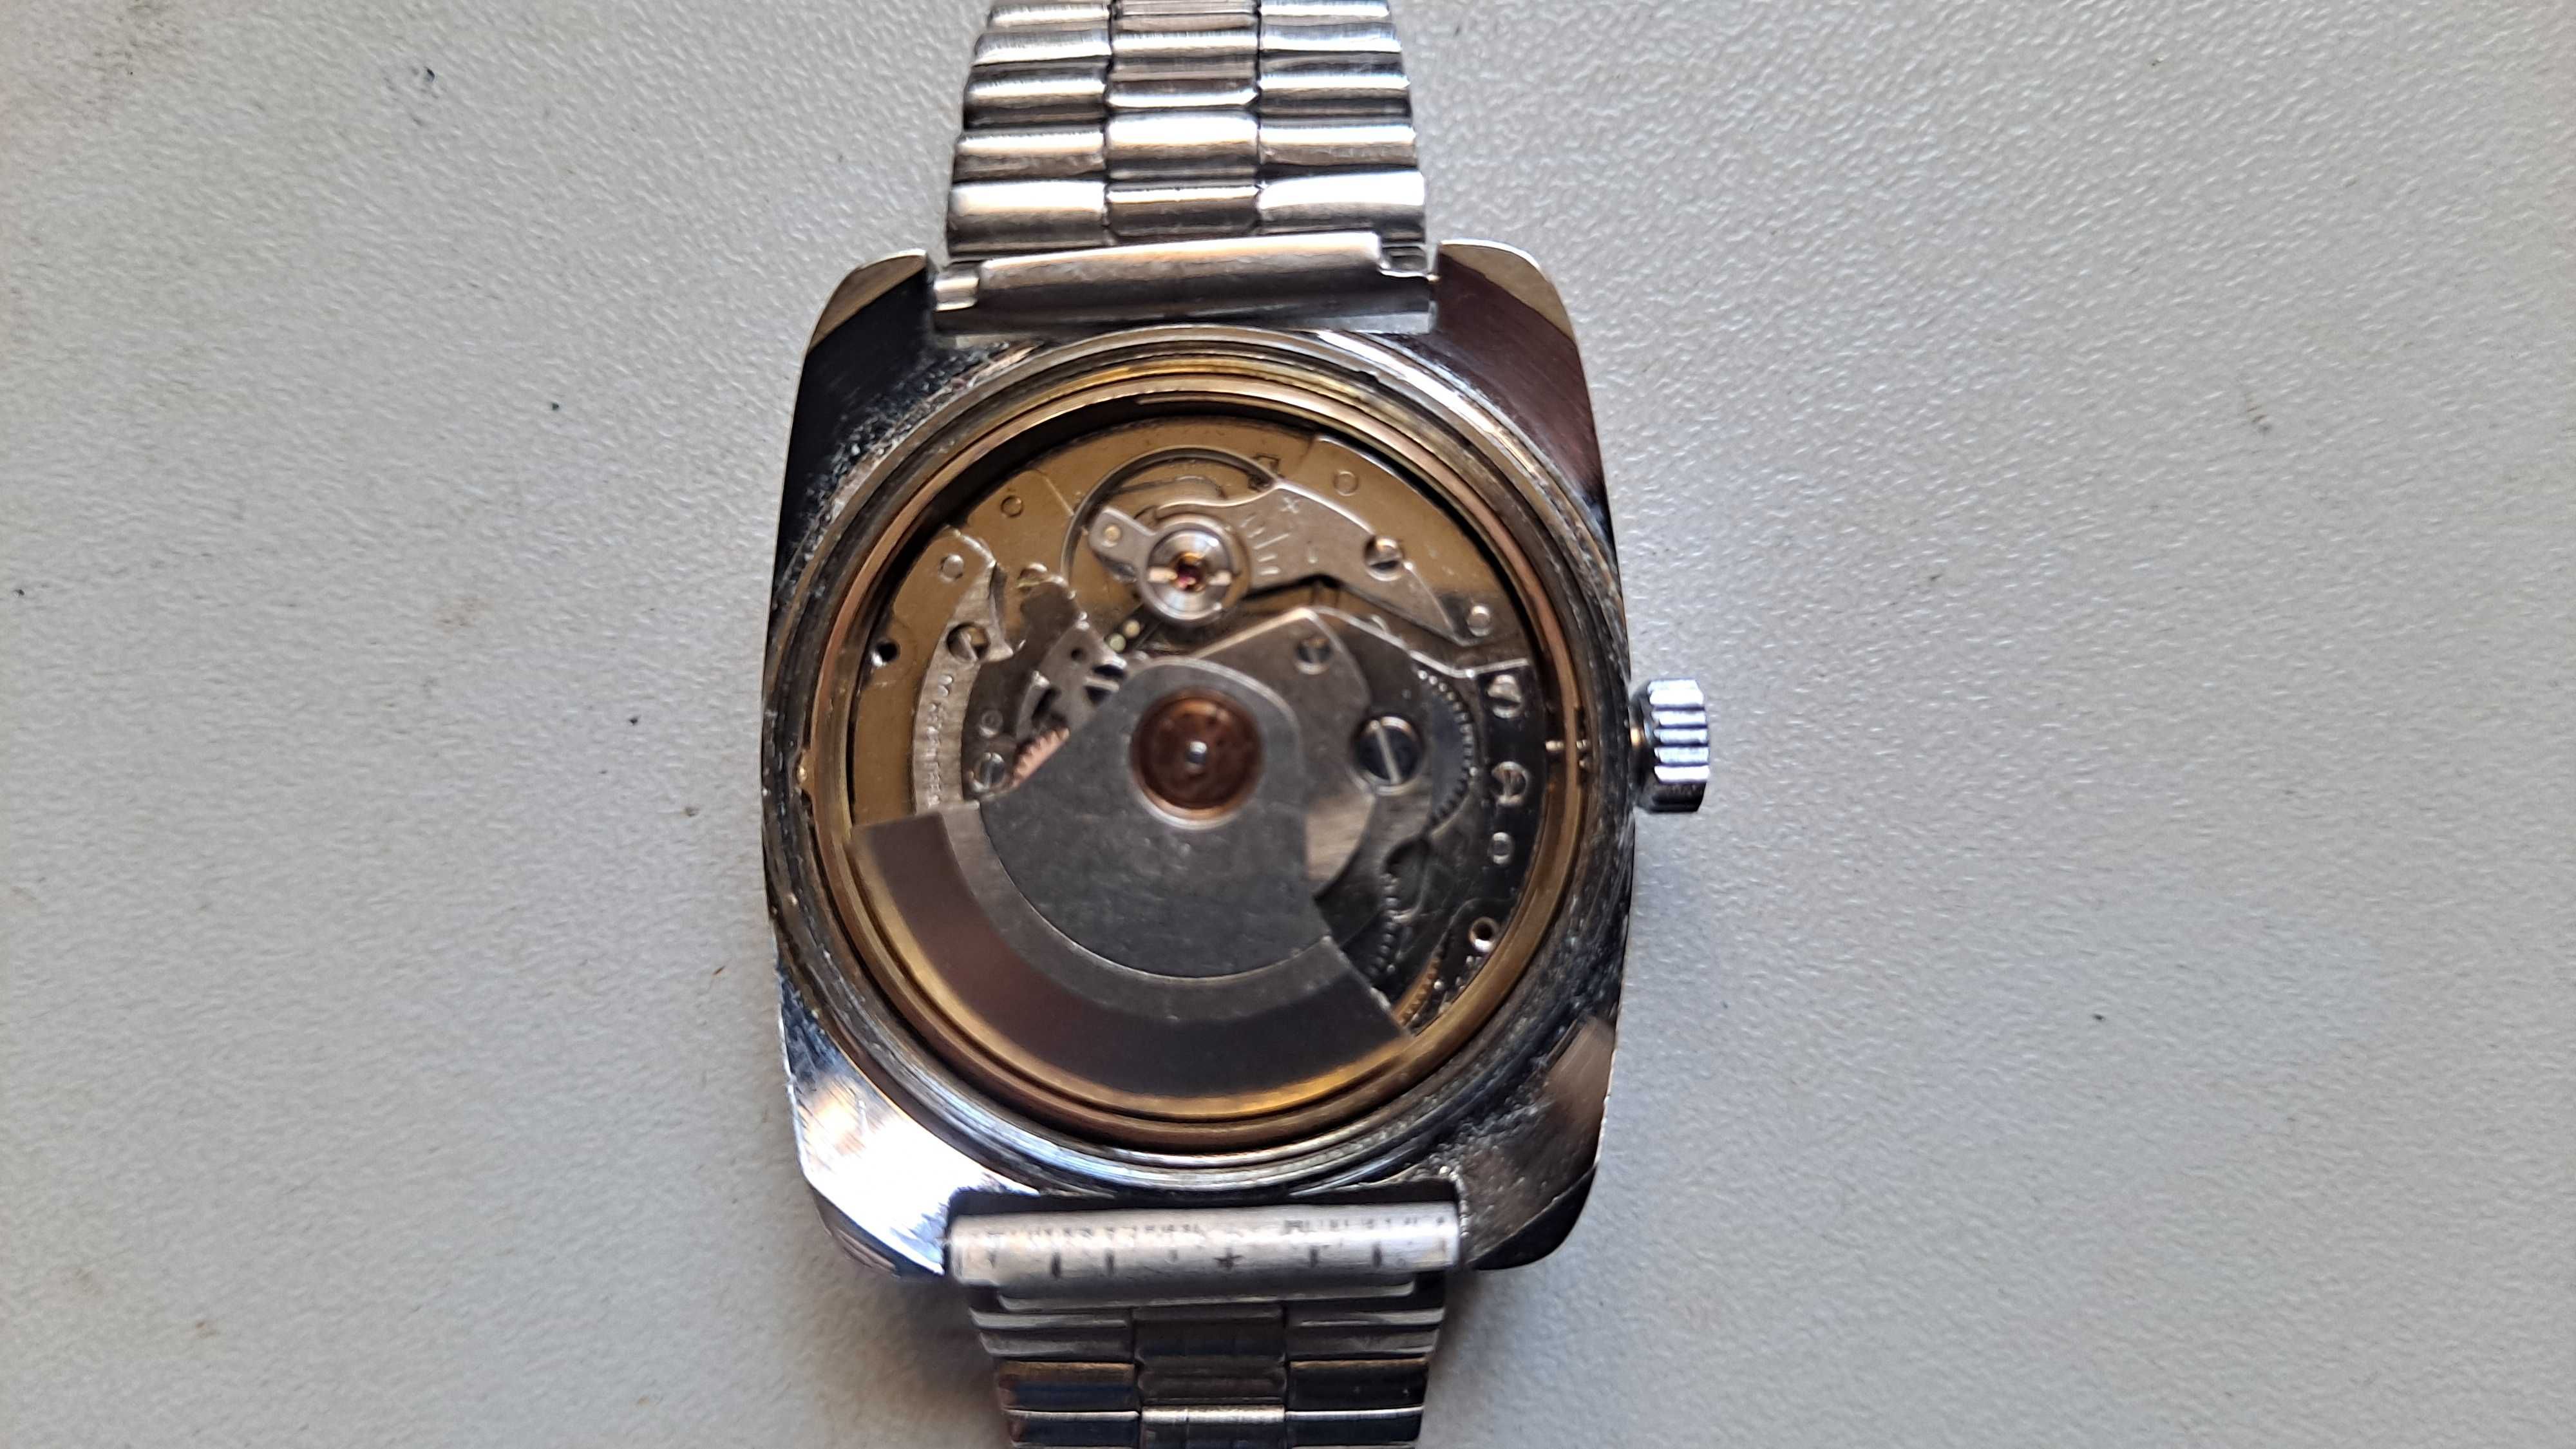 LOVER - NOS -automat - vintage - zegarek